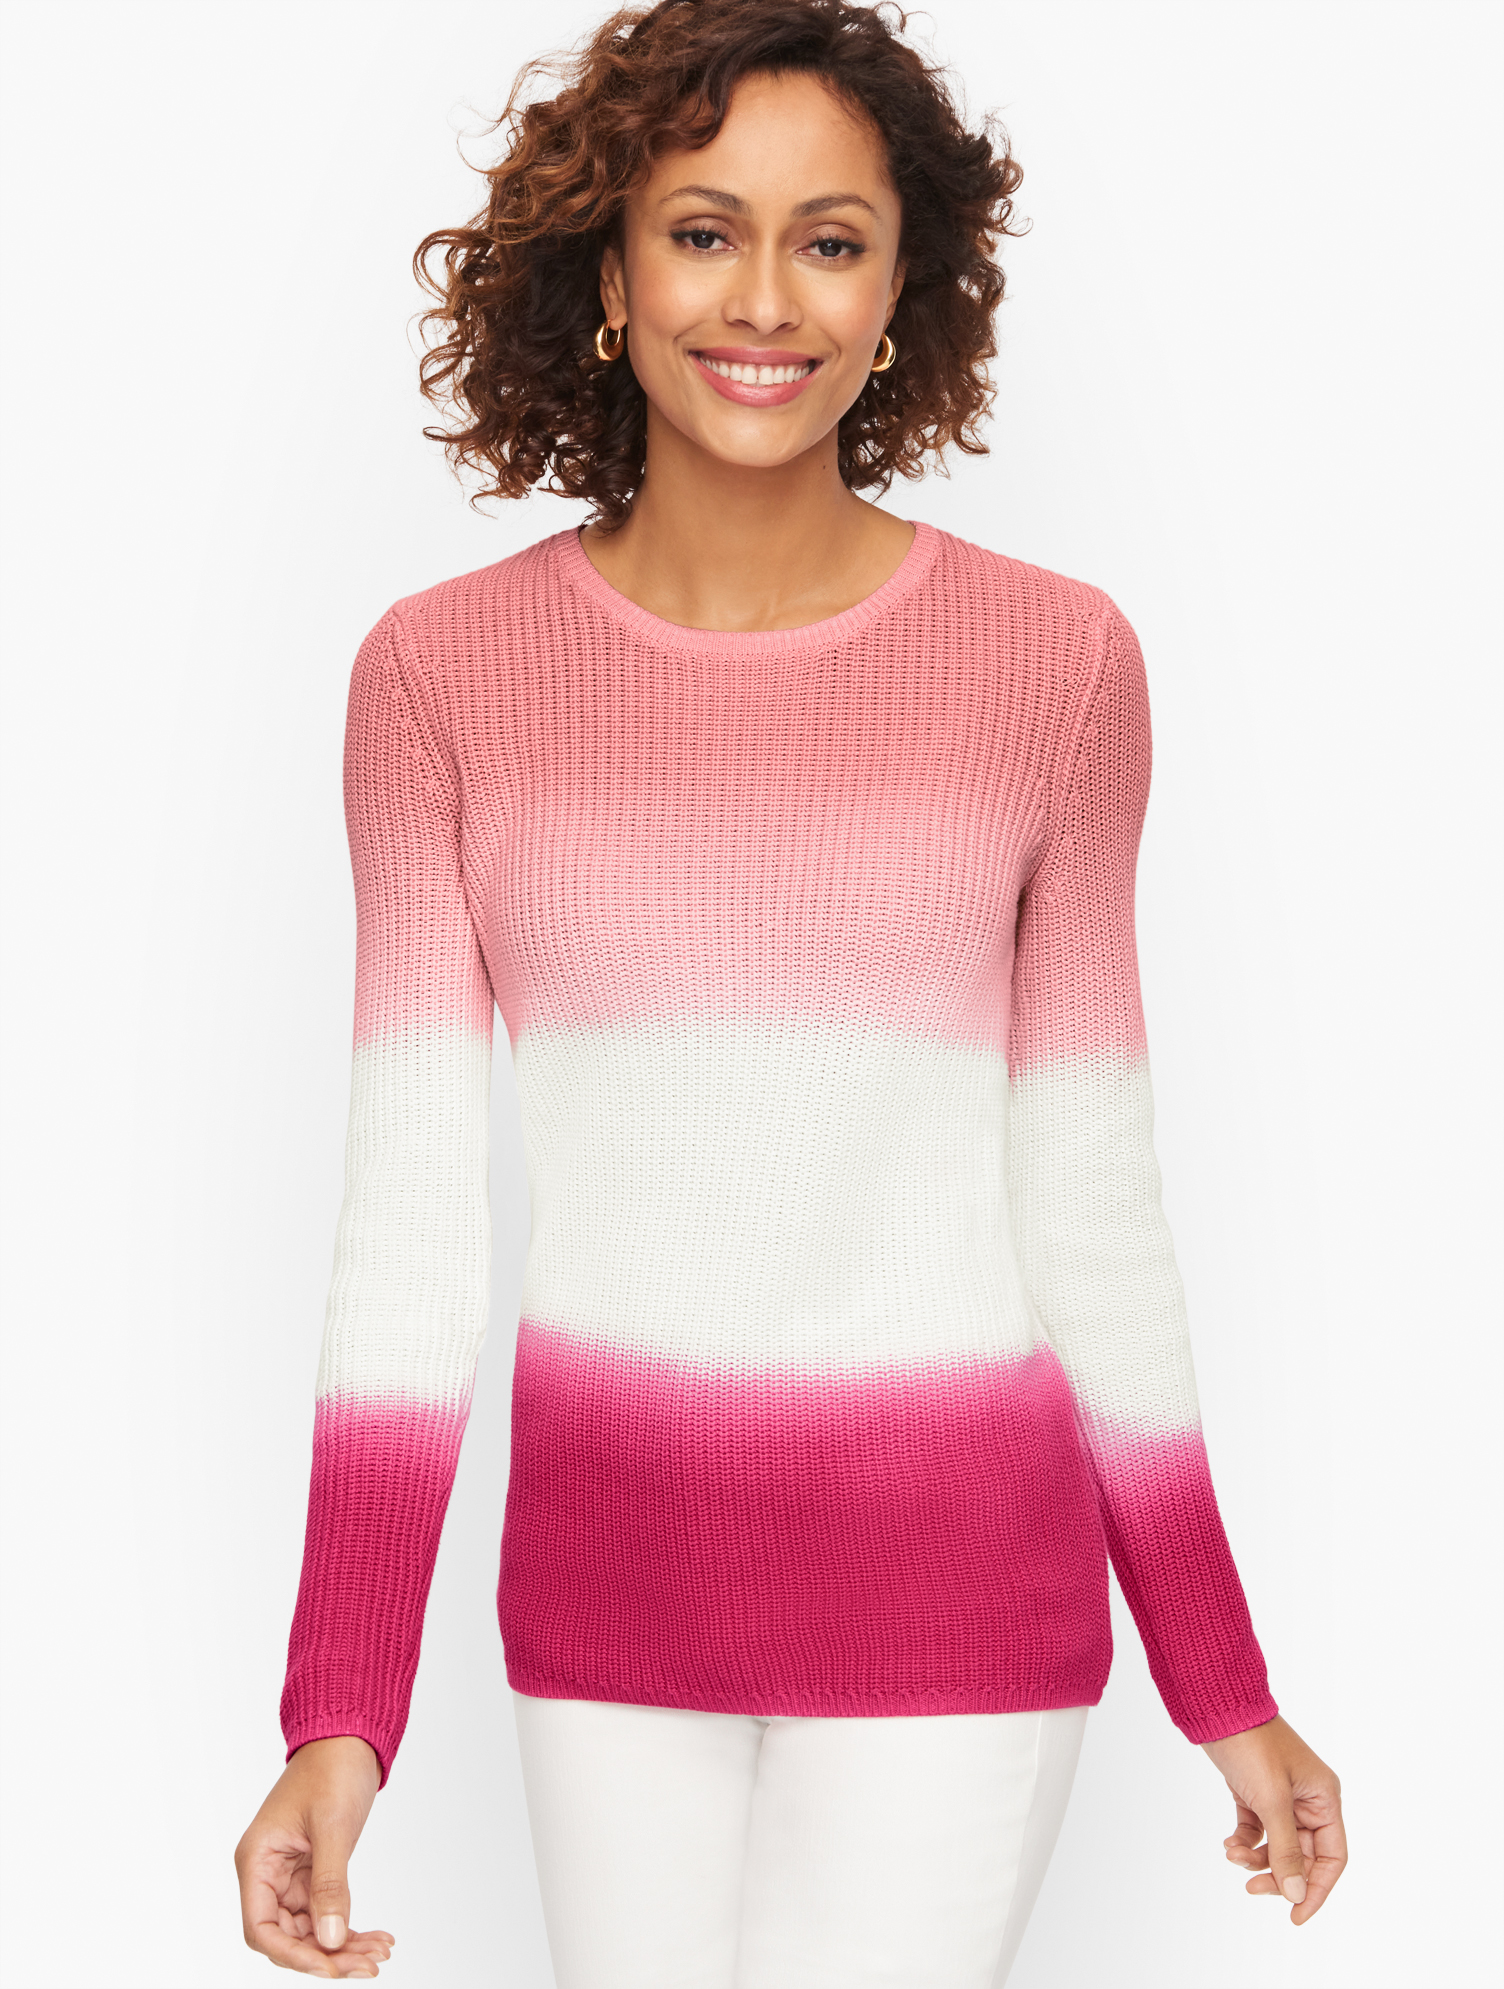 Talbots Shaker Stitch Sweater - Ombrã© Dip Dye - Punch Pink - 3x - 100% Cotton